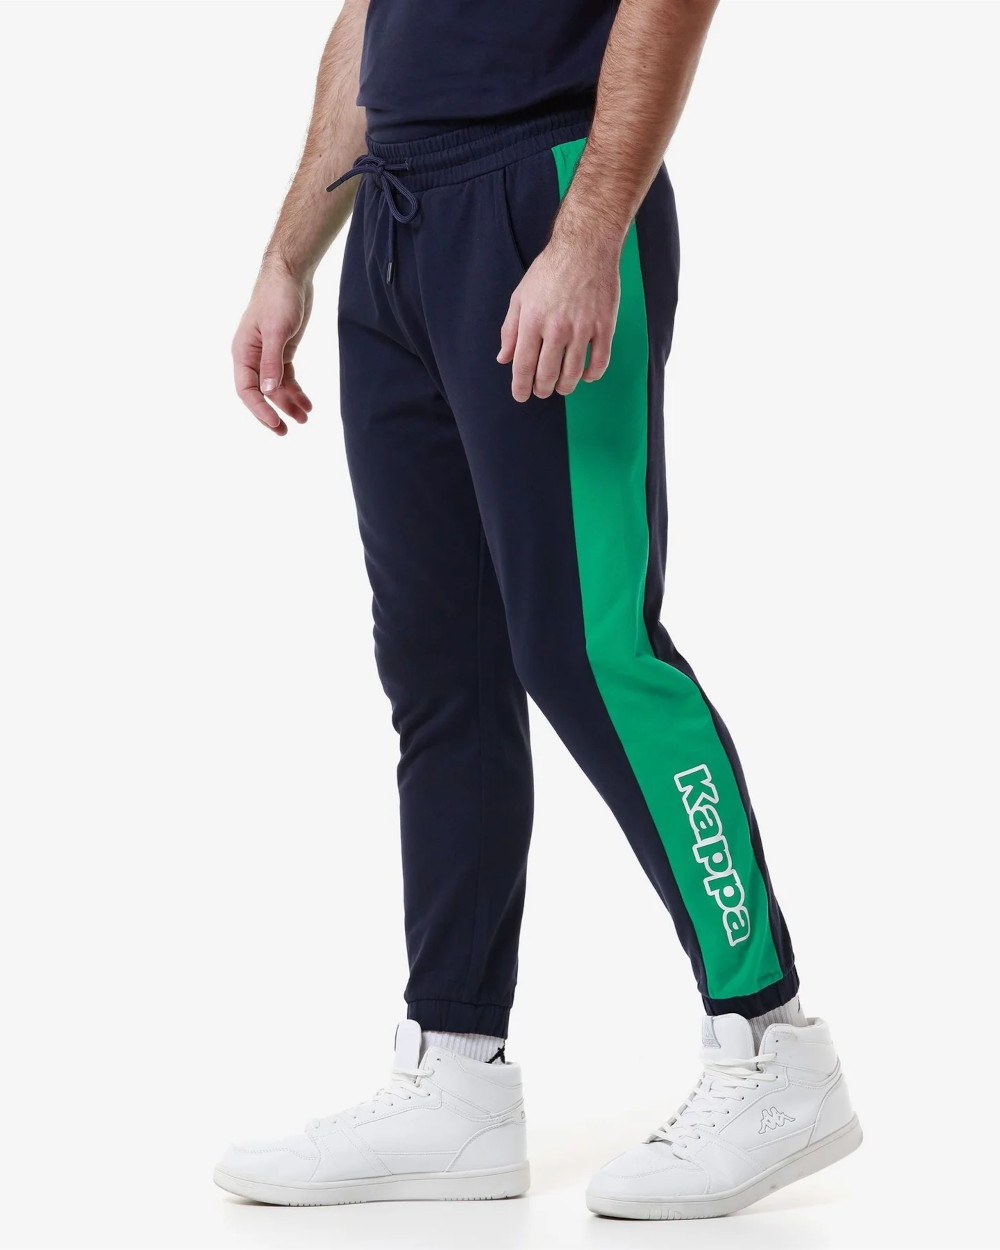  Pantaloni tuta Pants UOMO Kappa Logo Folio Blu Verde con tasche Cotone Garzato